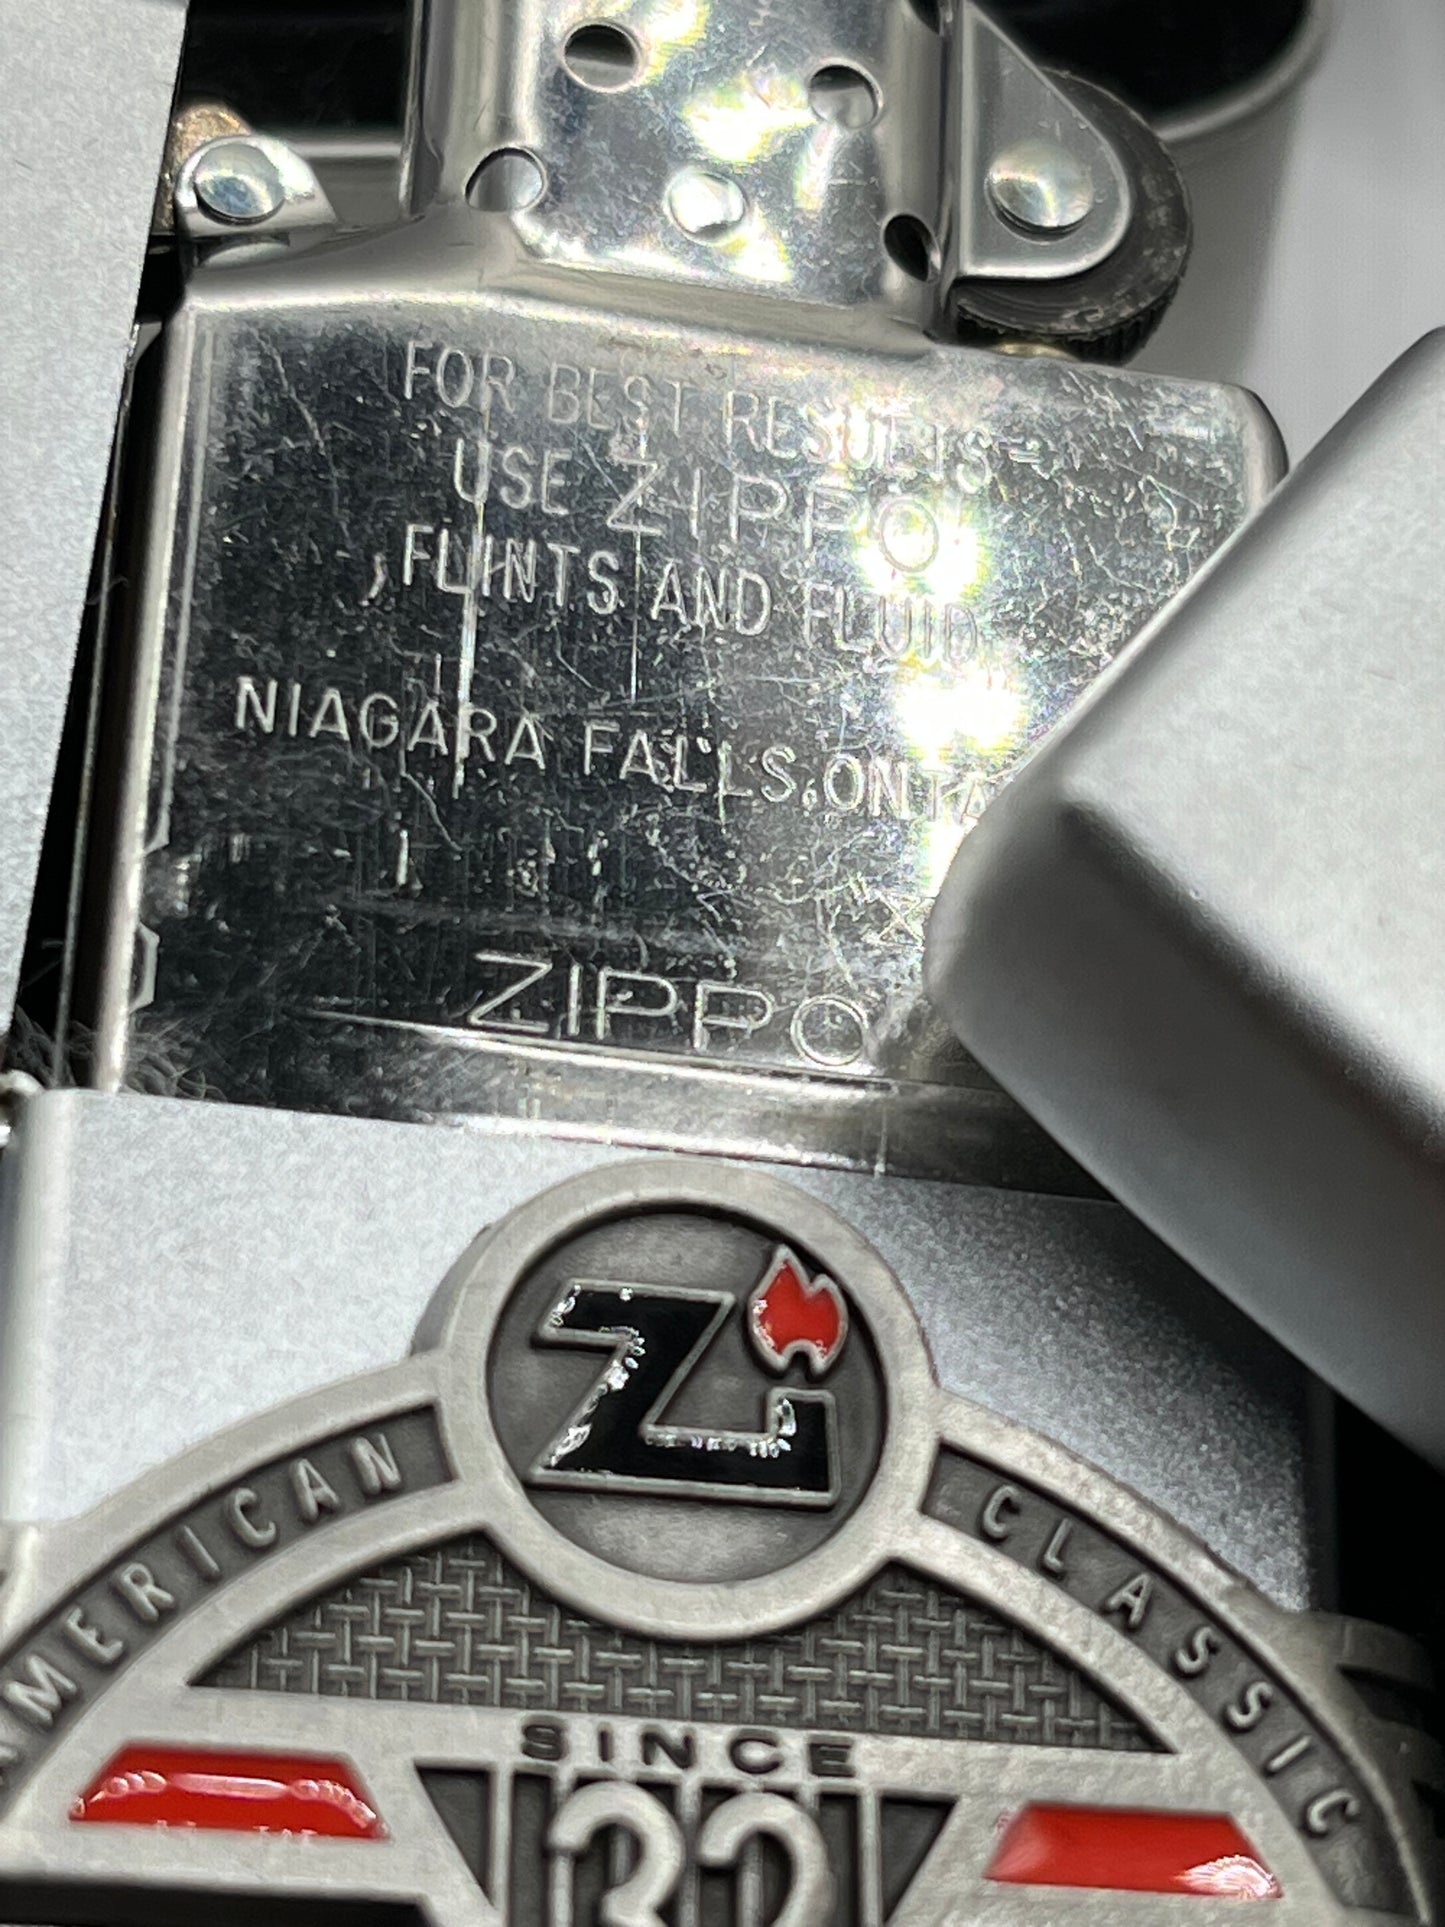 Zippo Satin Chrome Set #561 Windproof Classics, #562 American Legend, #563 American Classic and #564 Genuine American with Niagara Falls inserts in tins.